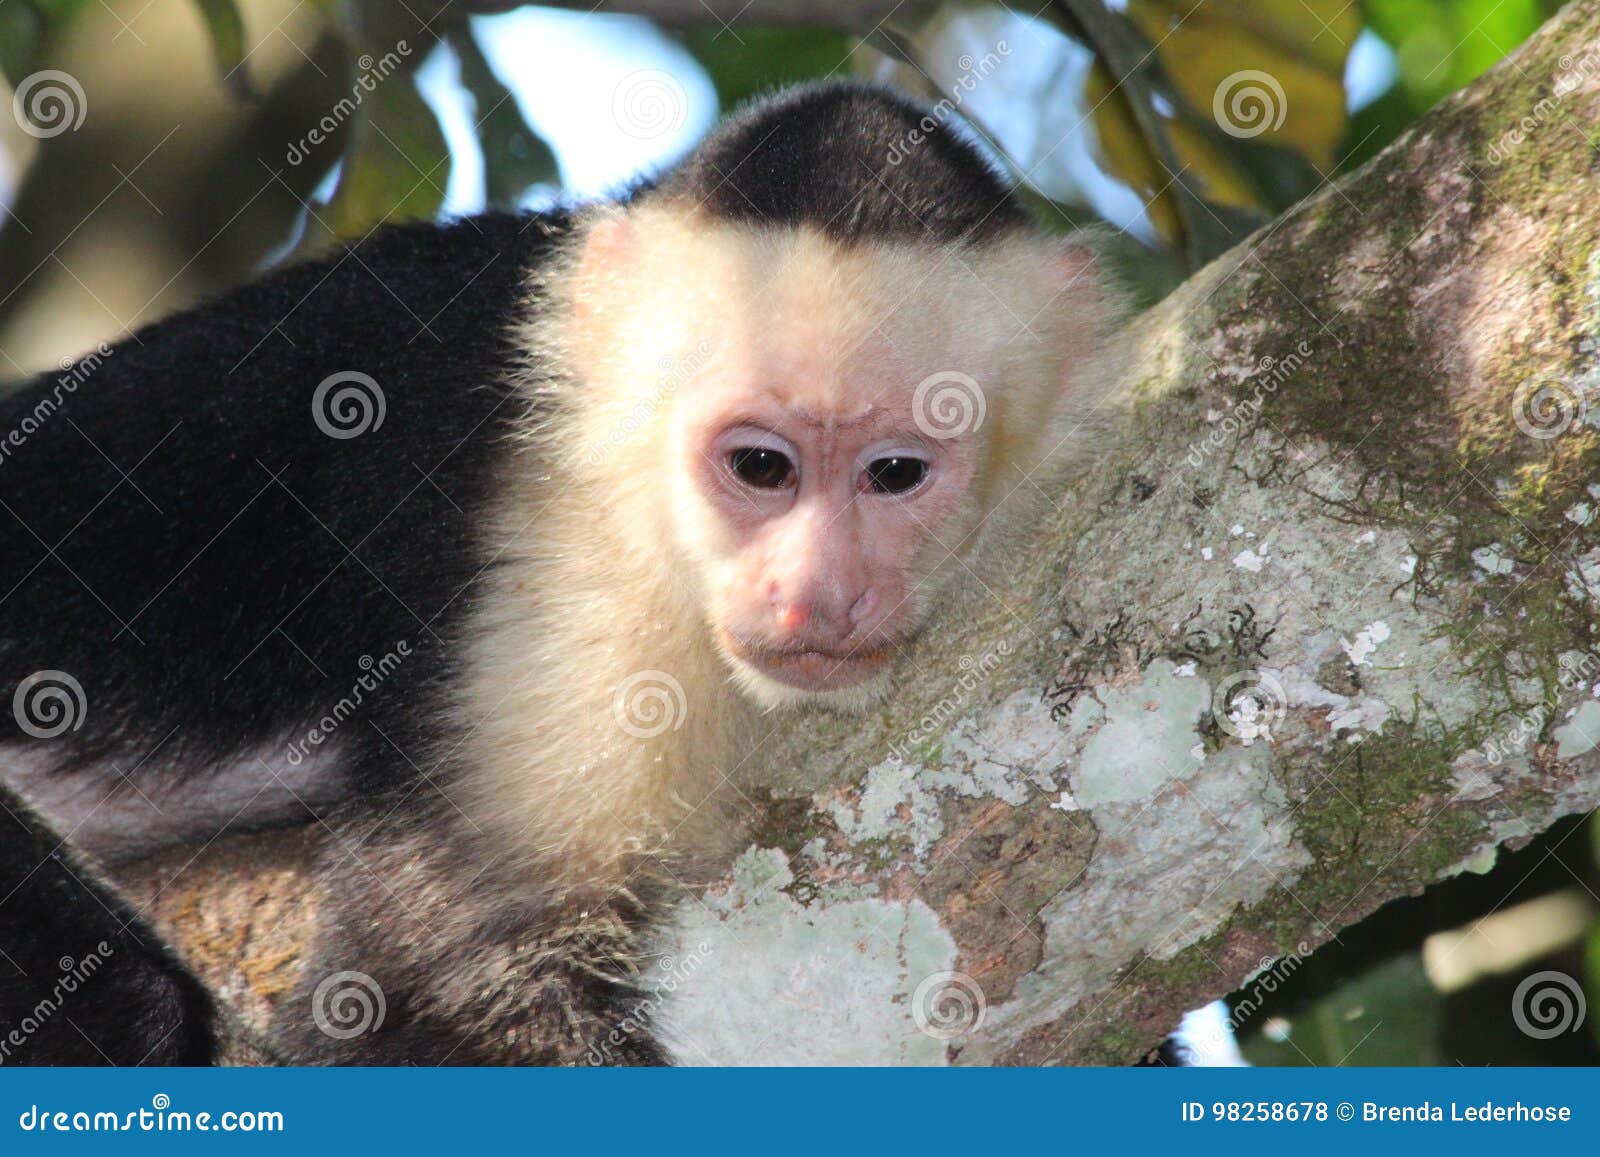 capuchin monkey costa rica